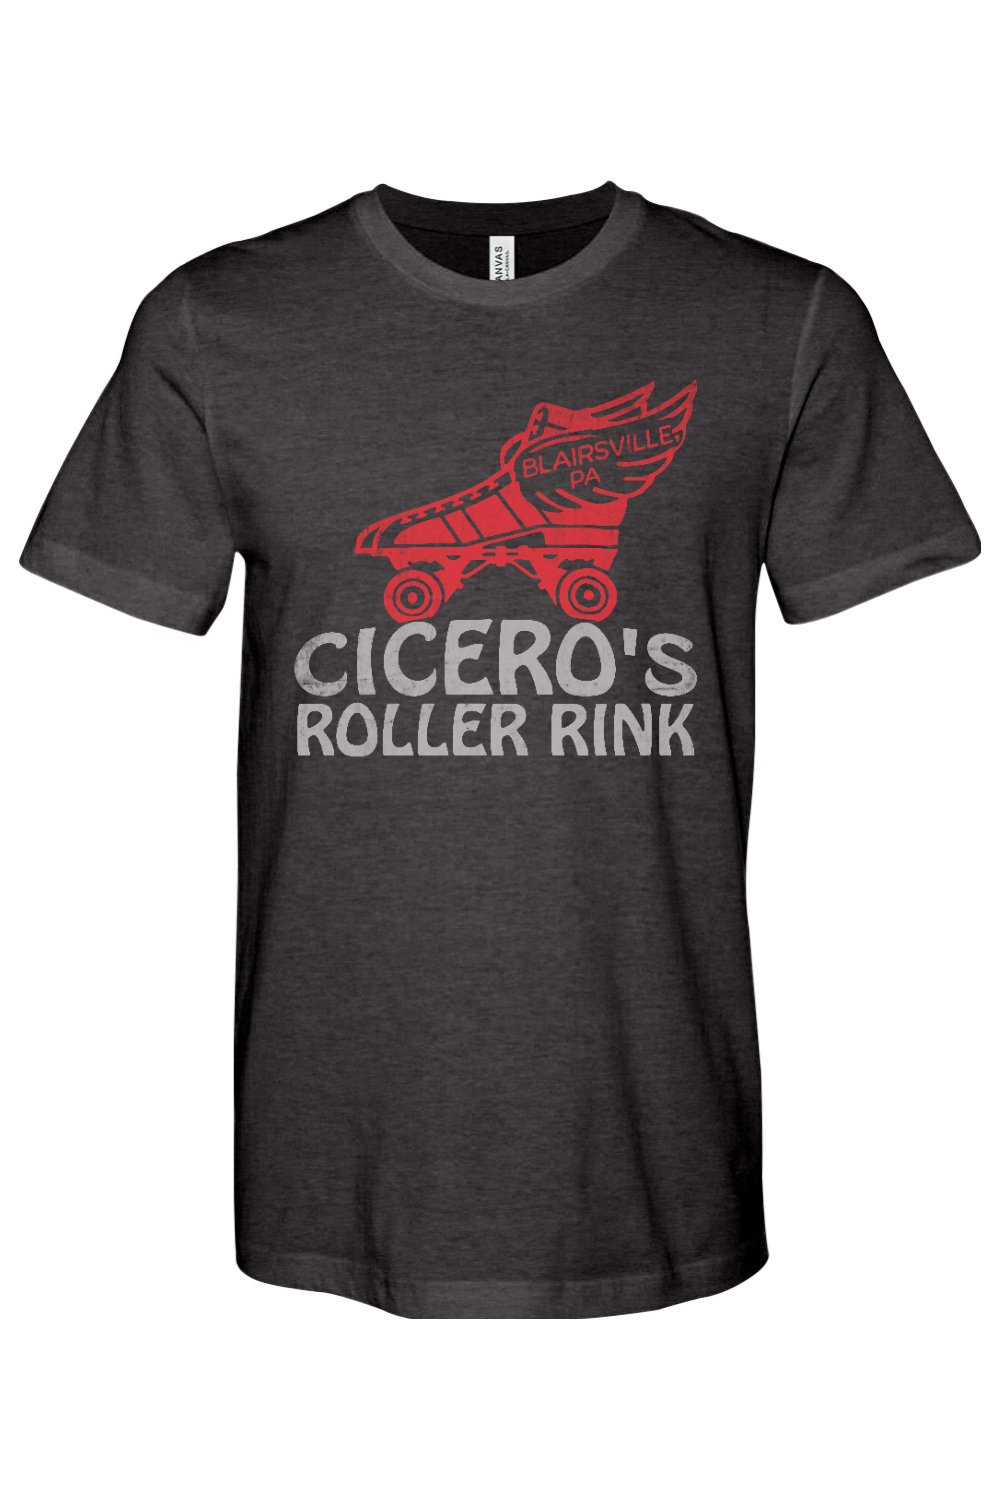 Cicero's Roller Rink - Blairsville - Yinzylvania